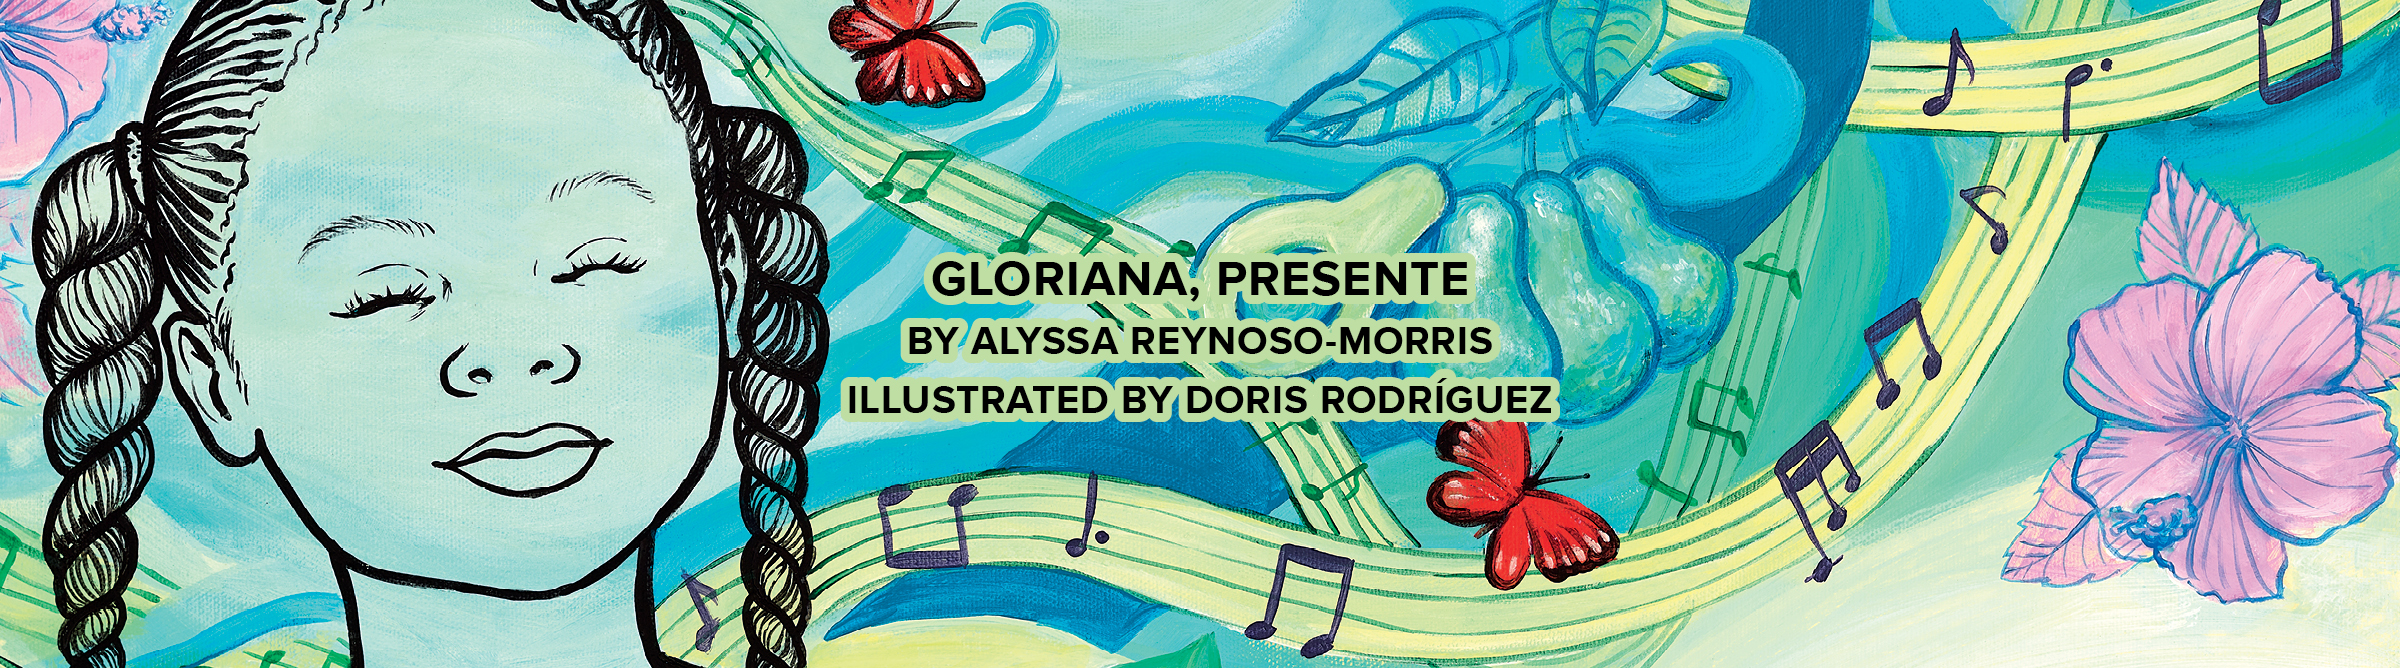 GLORIANA, PRESENTE by Alyssa Reynosa-Morris, illustrated by Doris Rodríguez